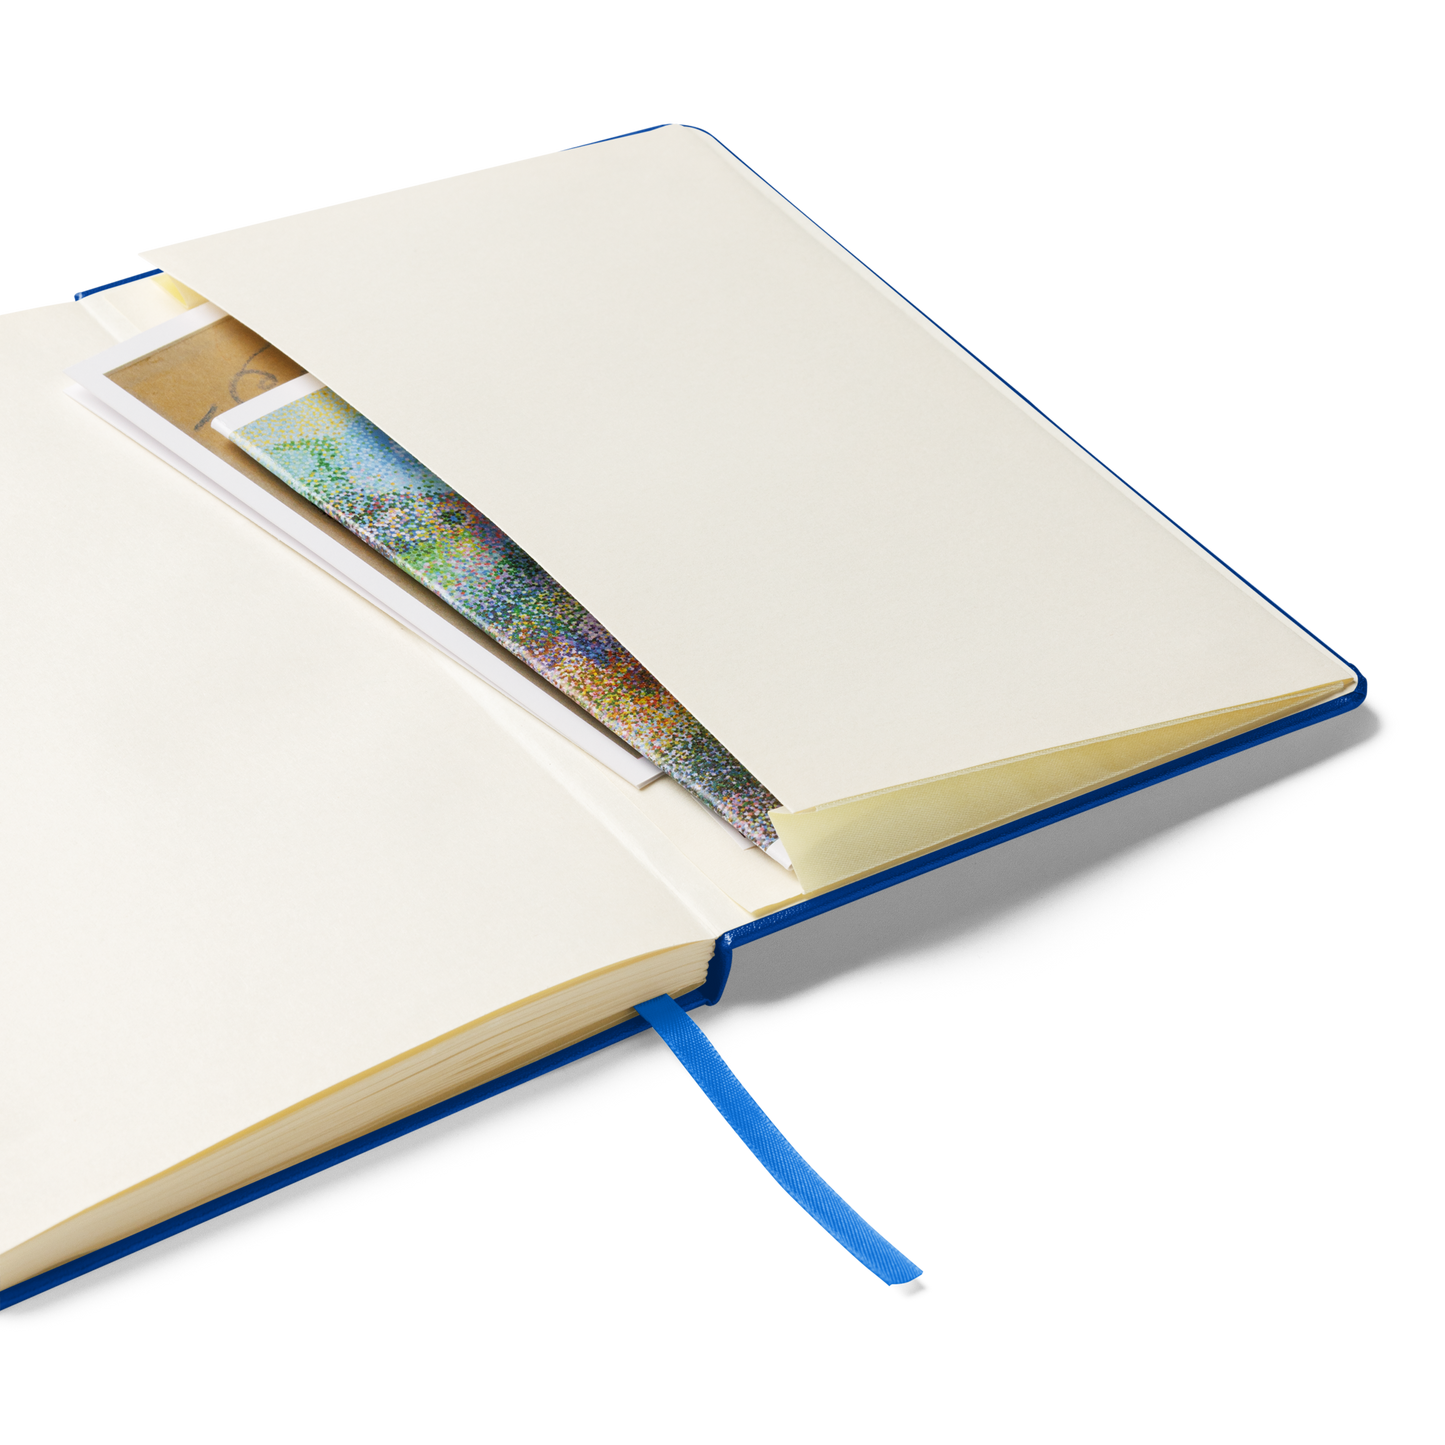 EverQuest® Classic Notebook